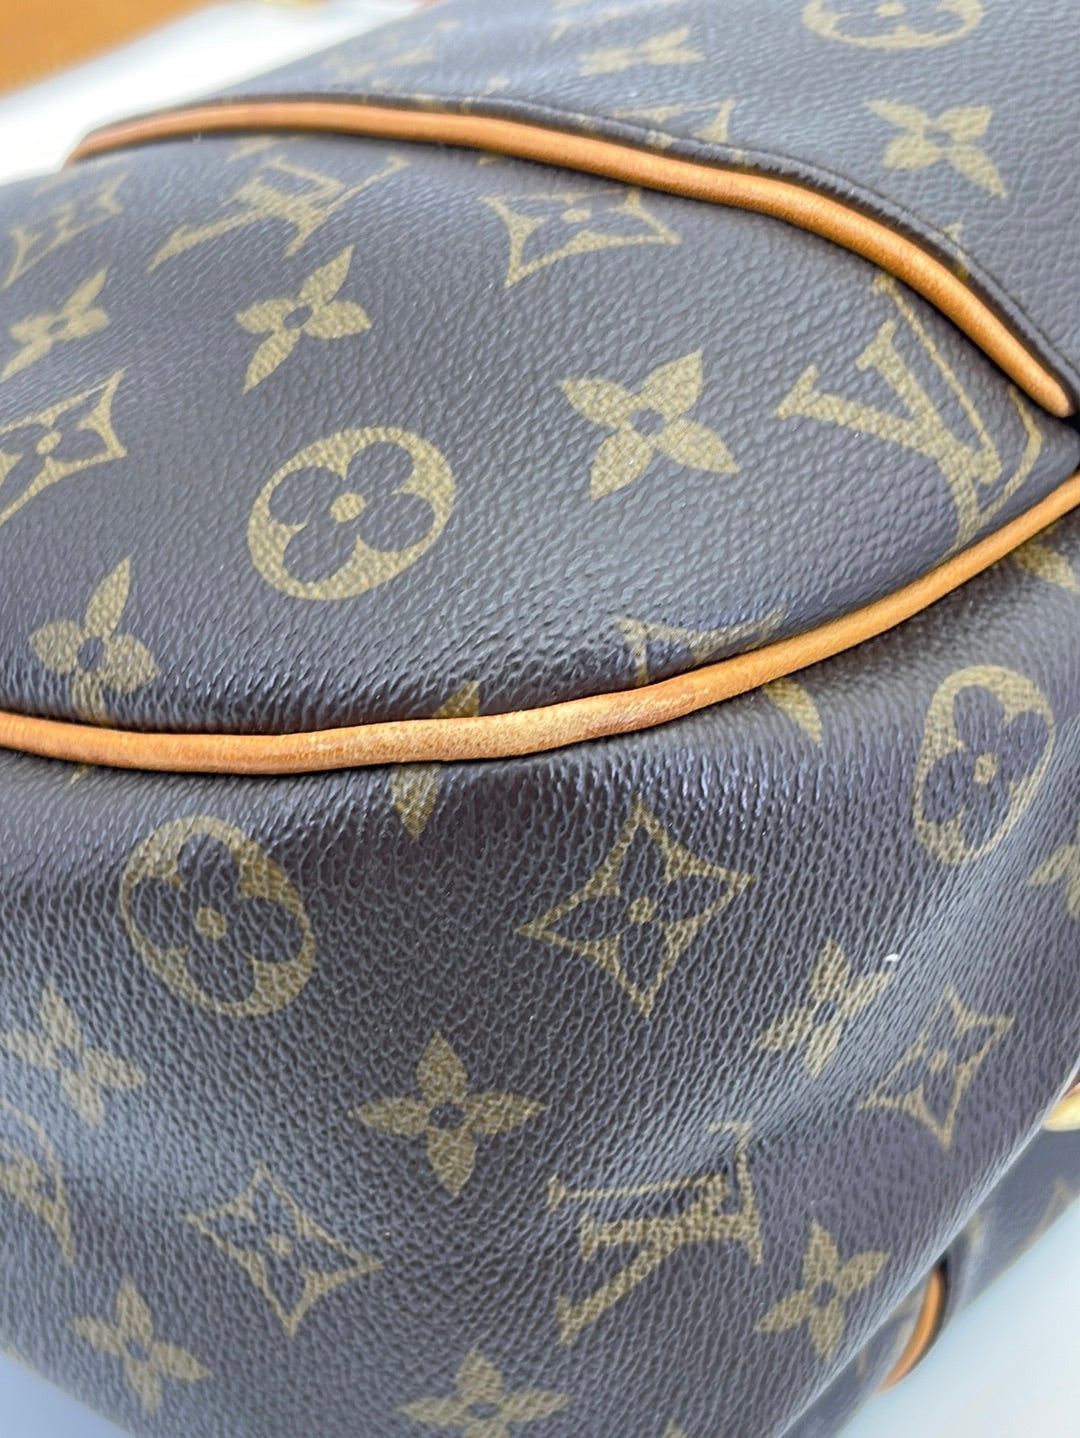 Authenticated Used Louis Vuitton LOUIS VUITTON Monogram Berry PM One  Shoulder Bag M41623 